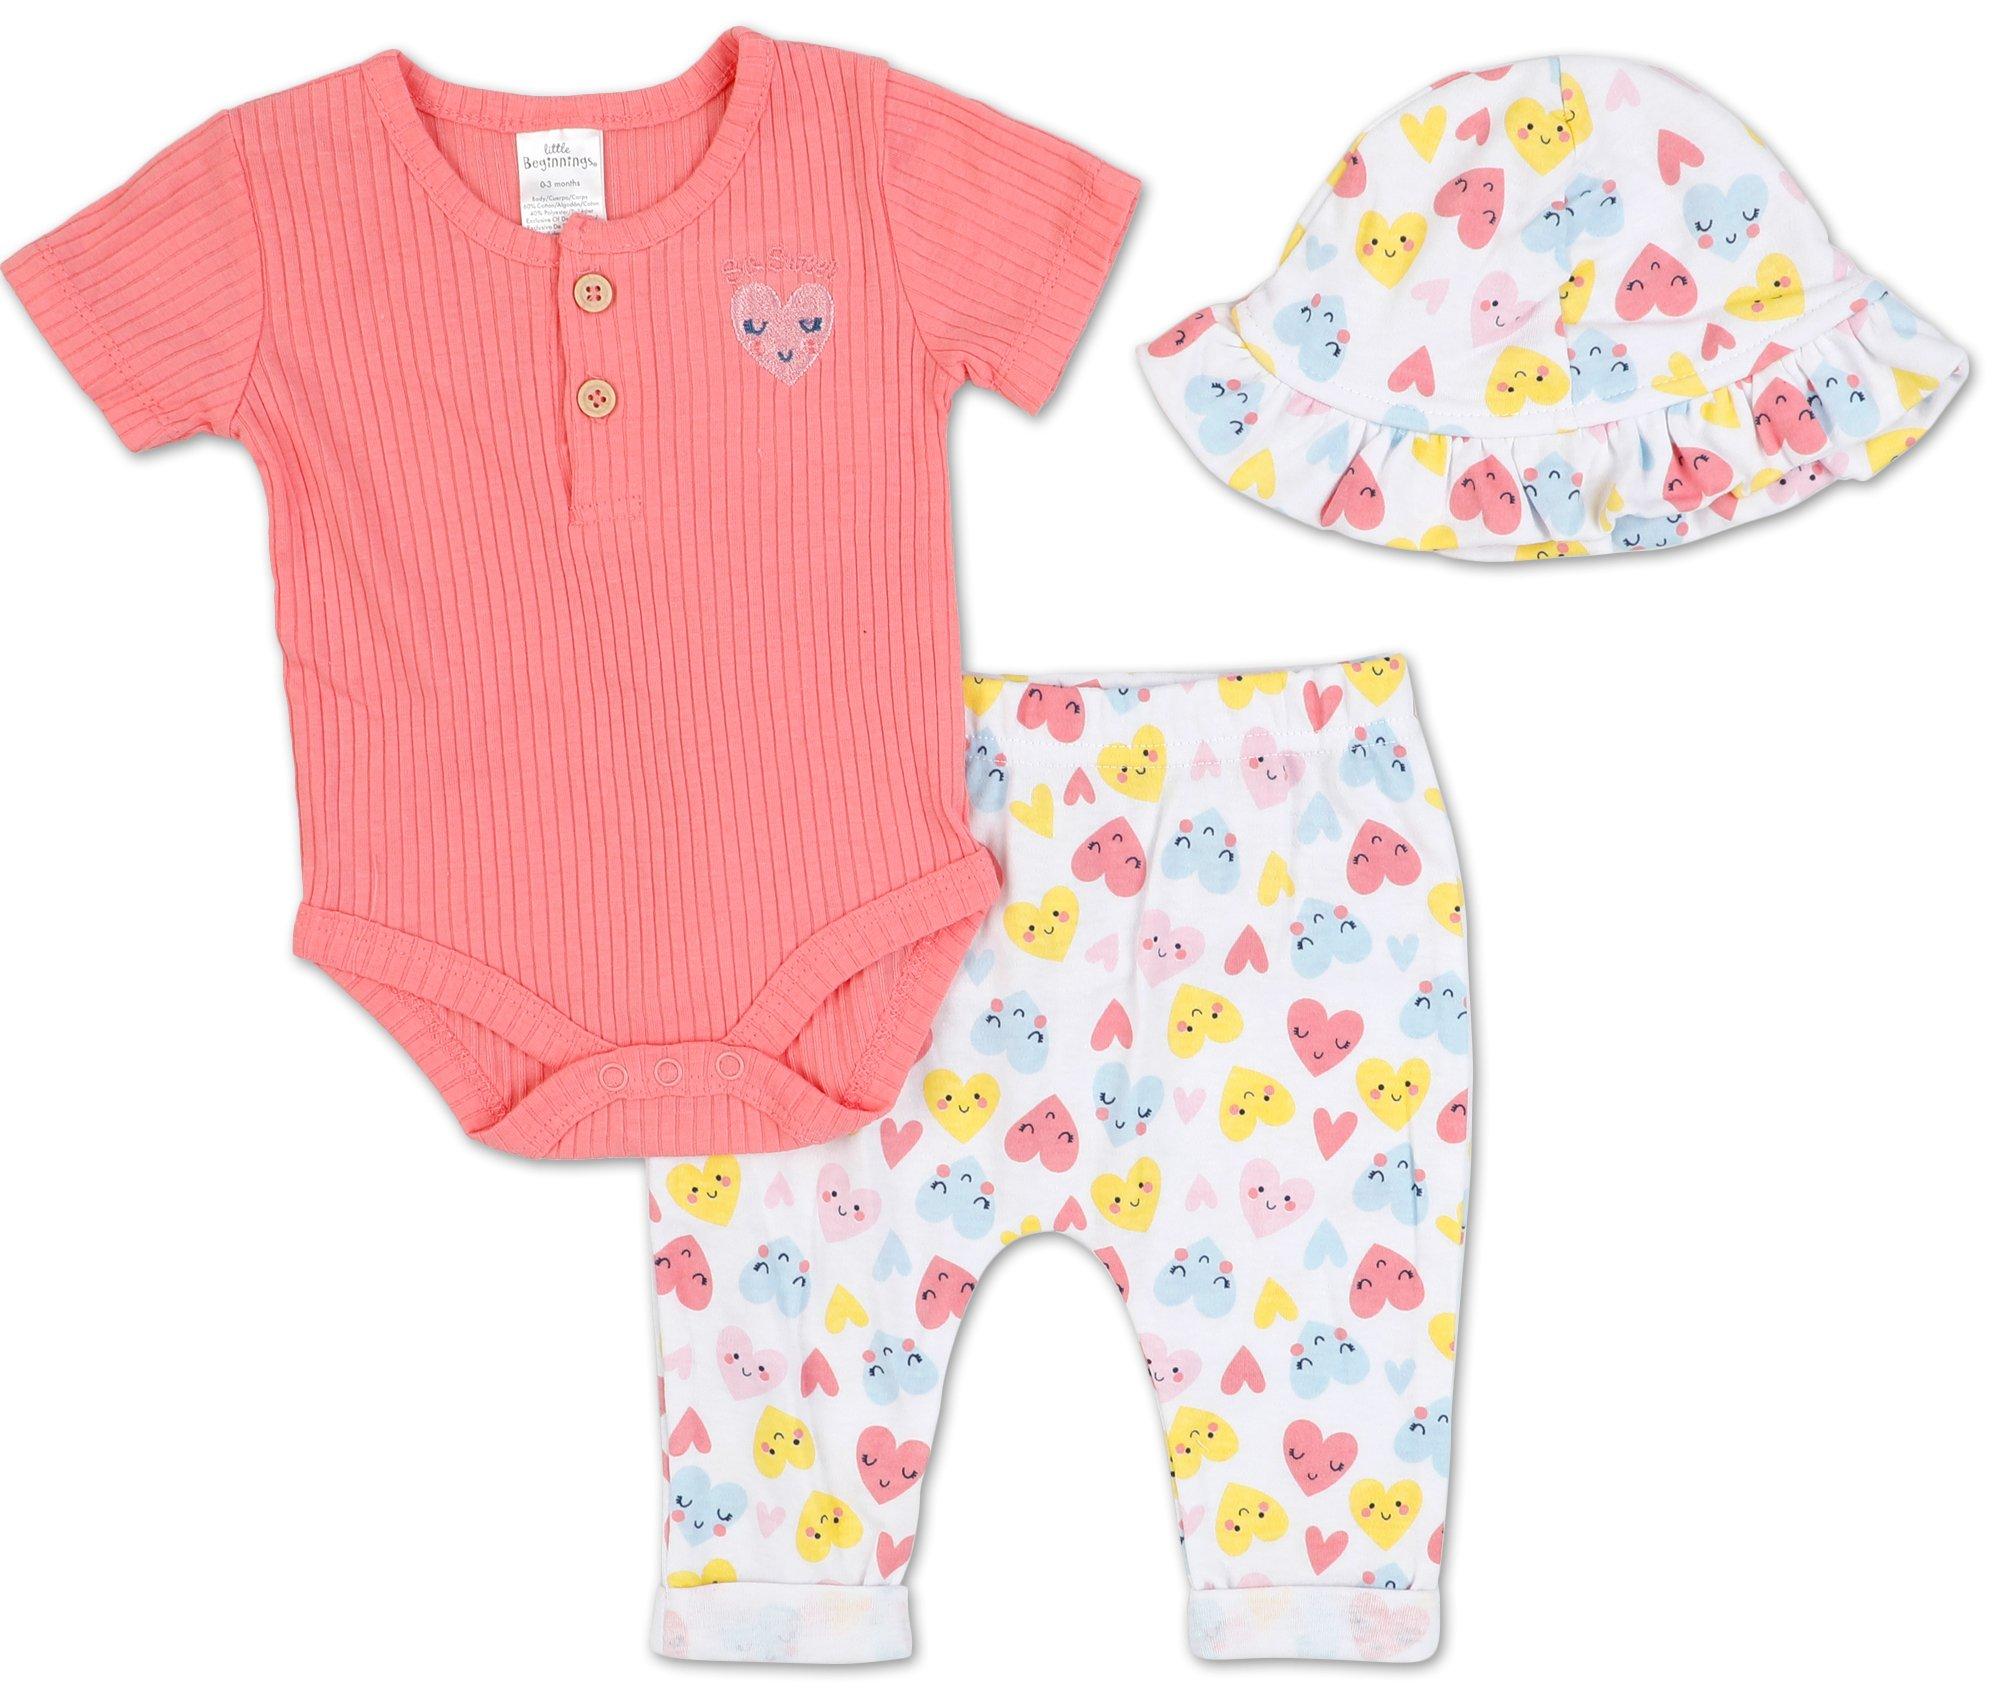 Baby Girls 3 Pc Heart Print Pants Set